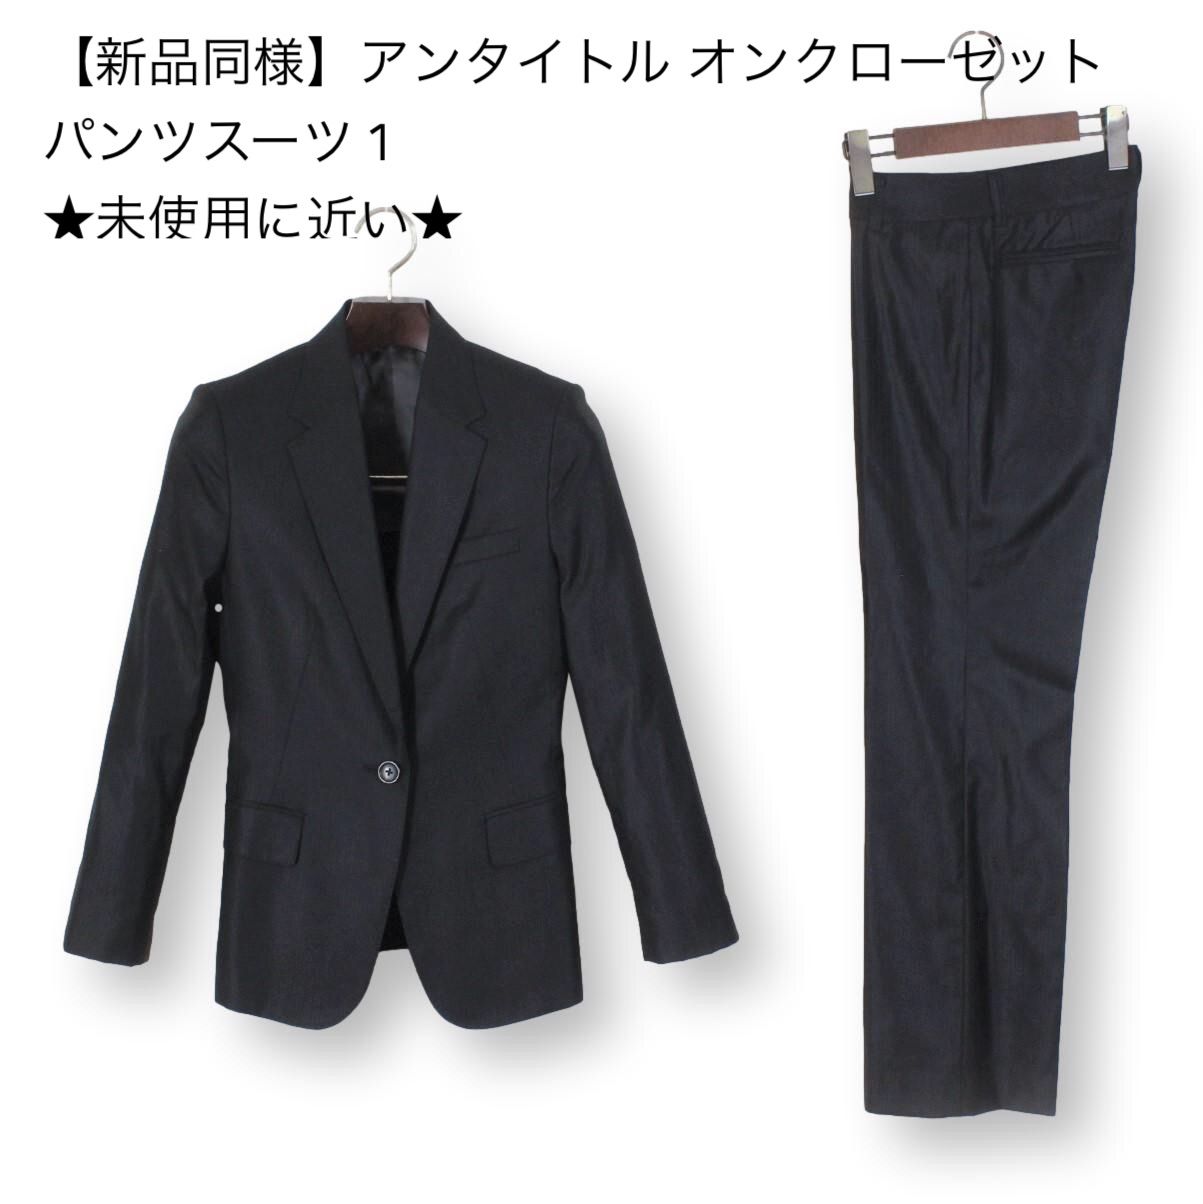 untitled 春用スーツ